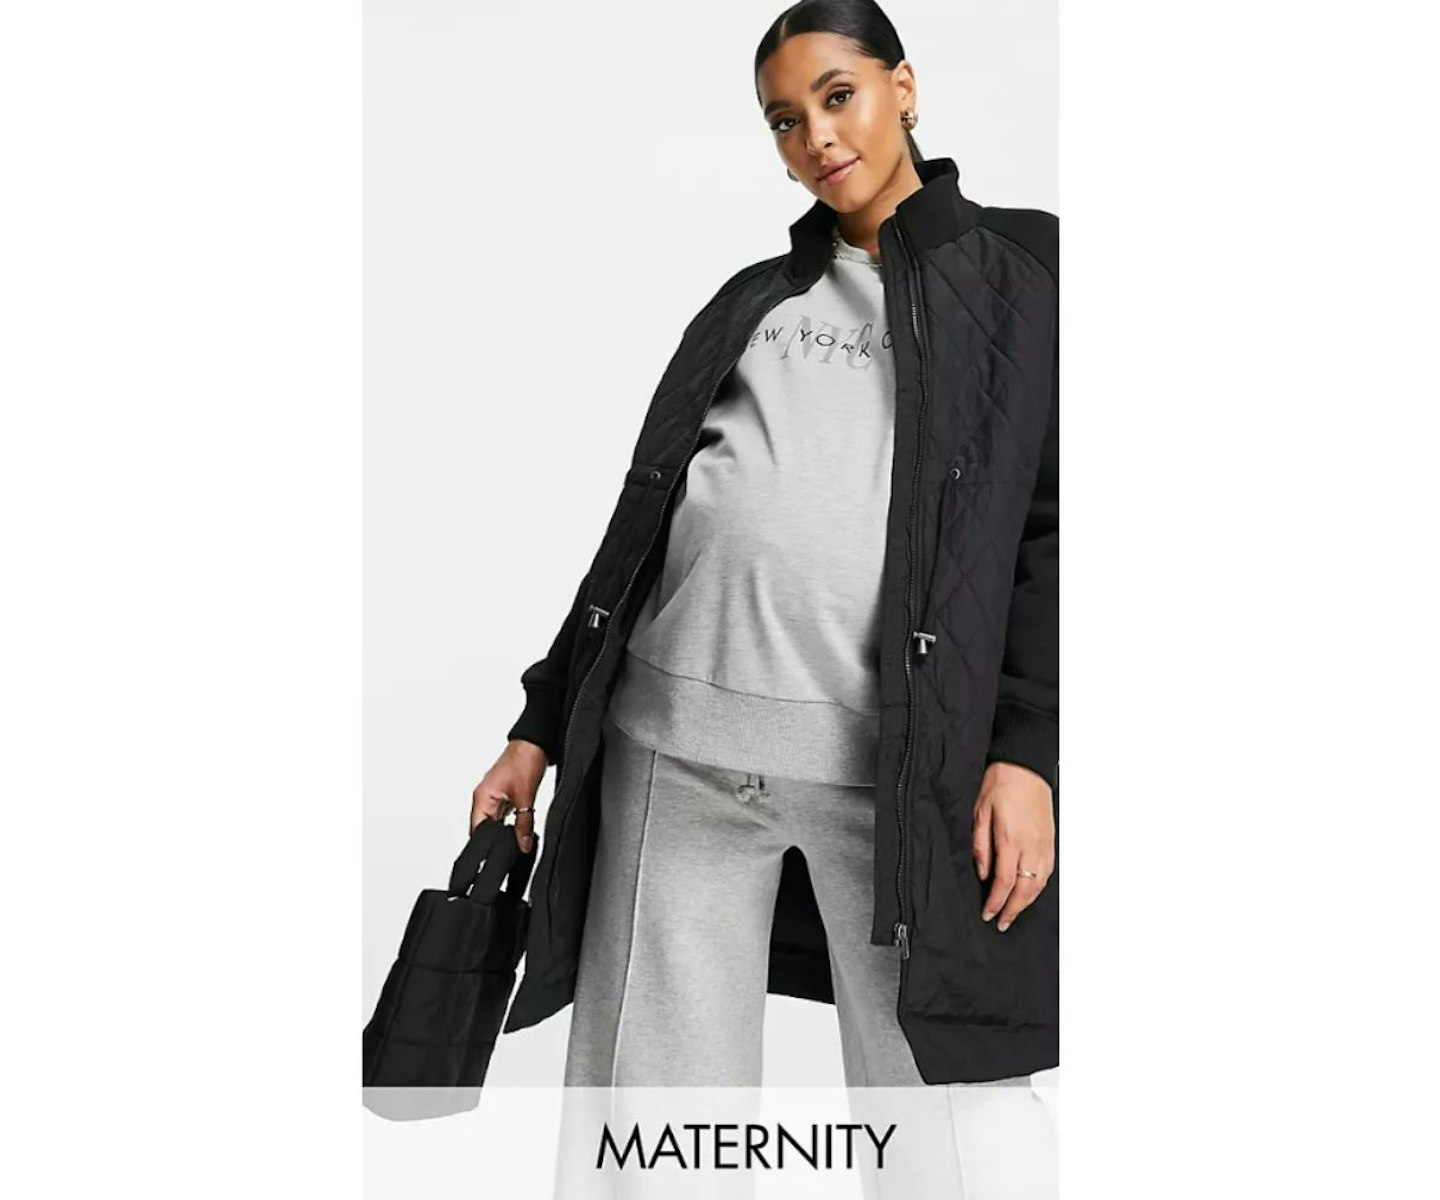 ASOS-maternity-sale